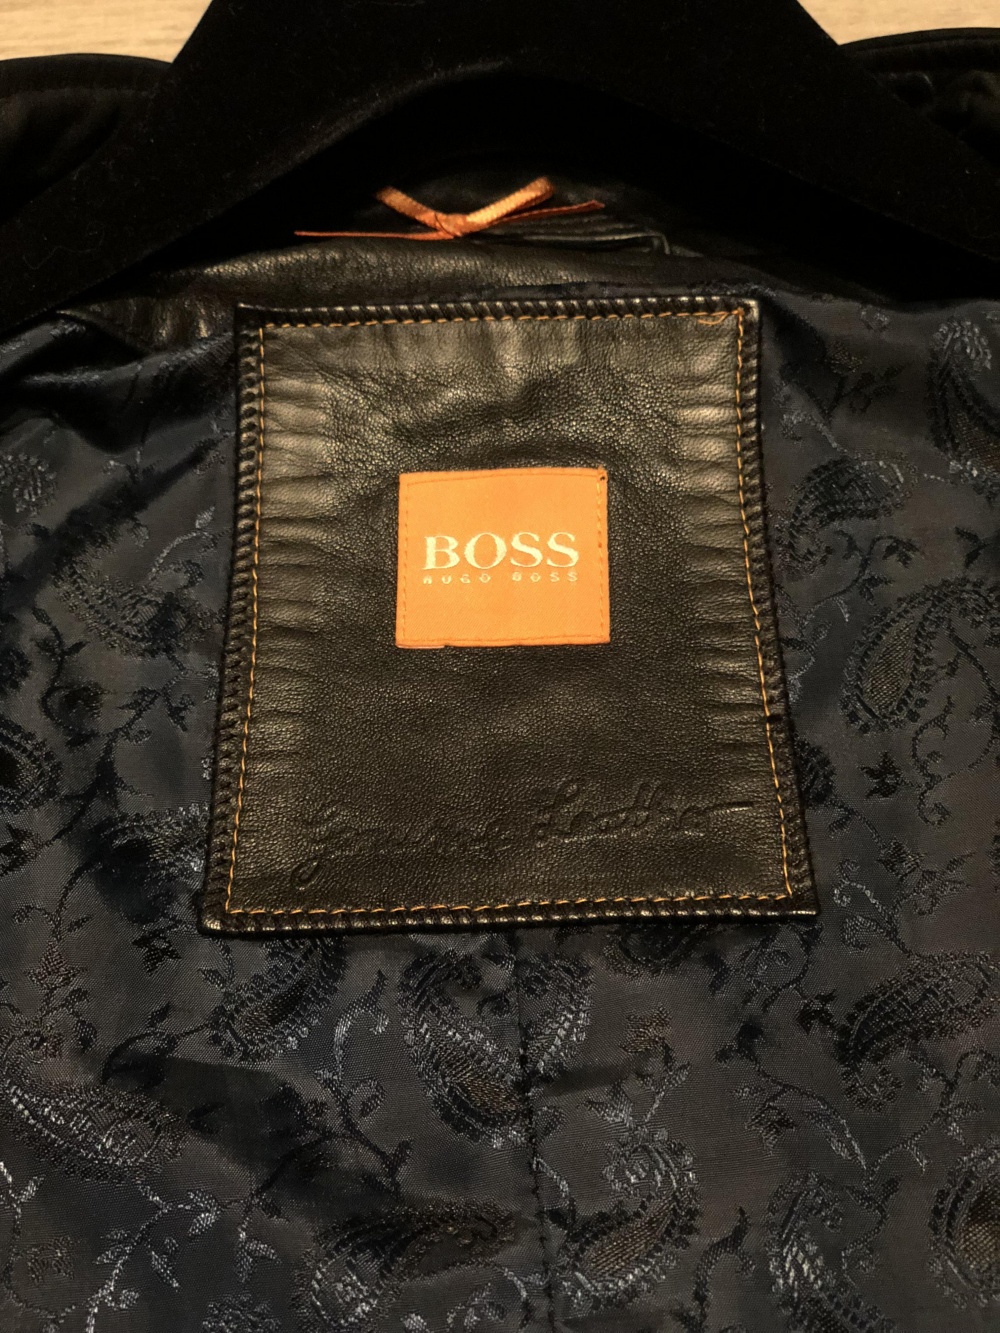 Куртка кожаная. Hugo Boss. Boss Orange. XS-S